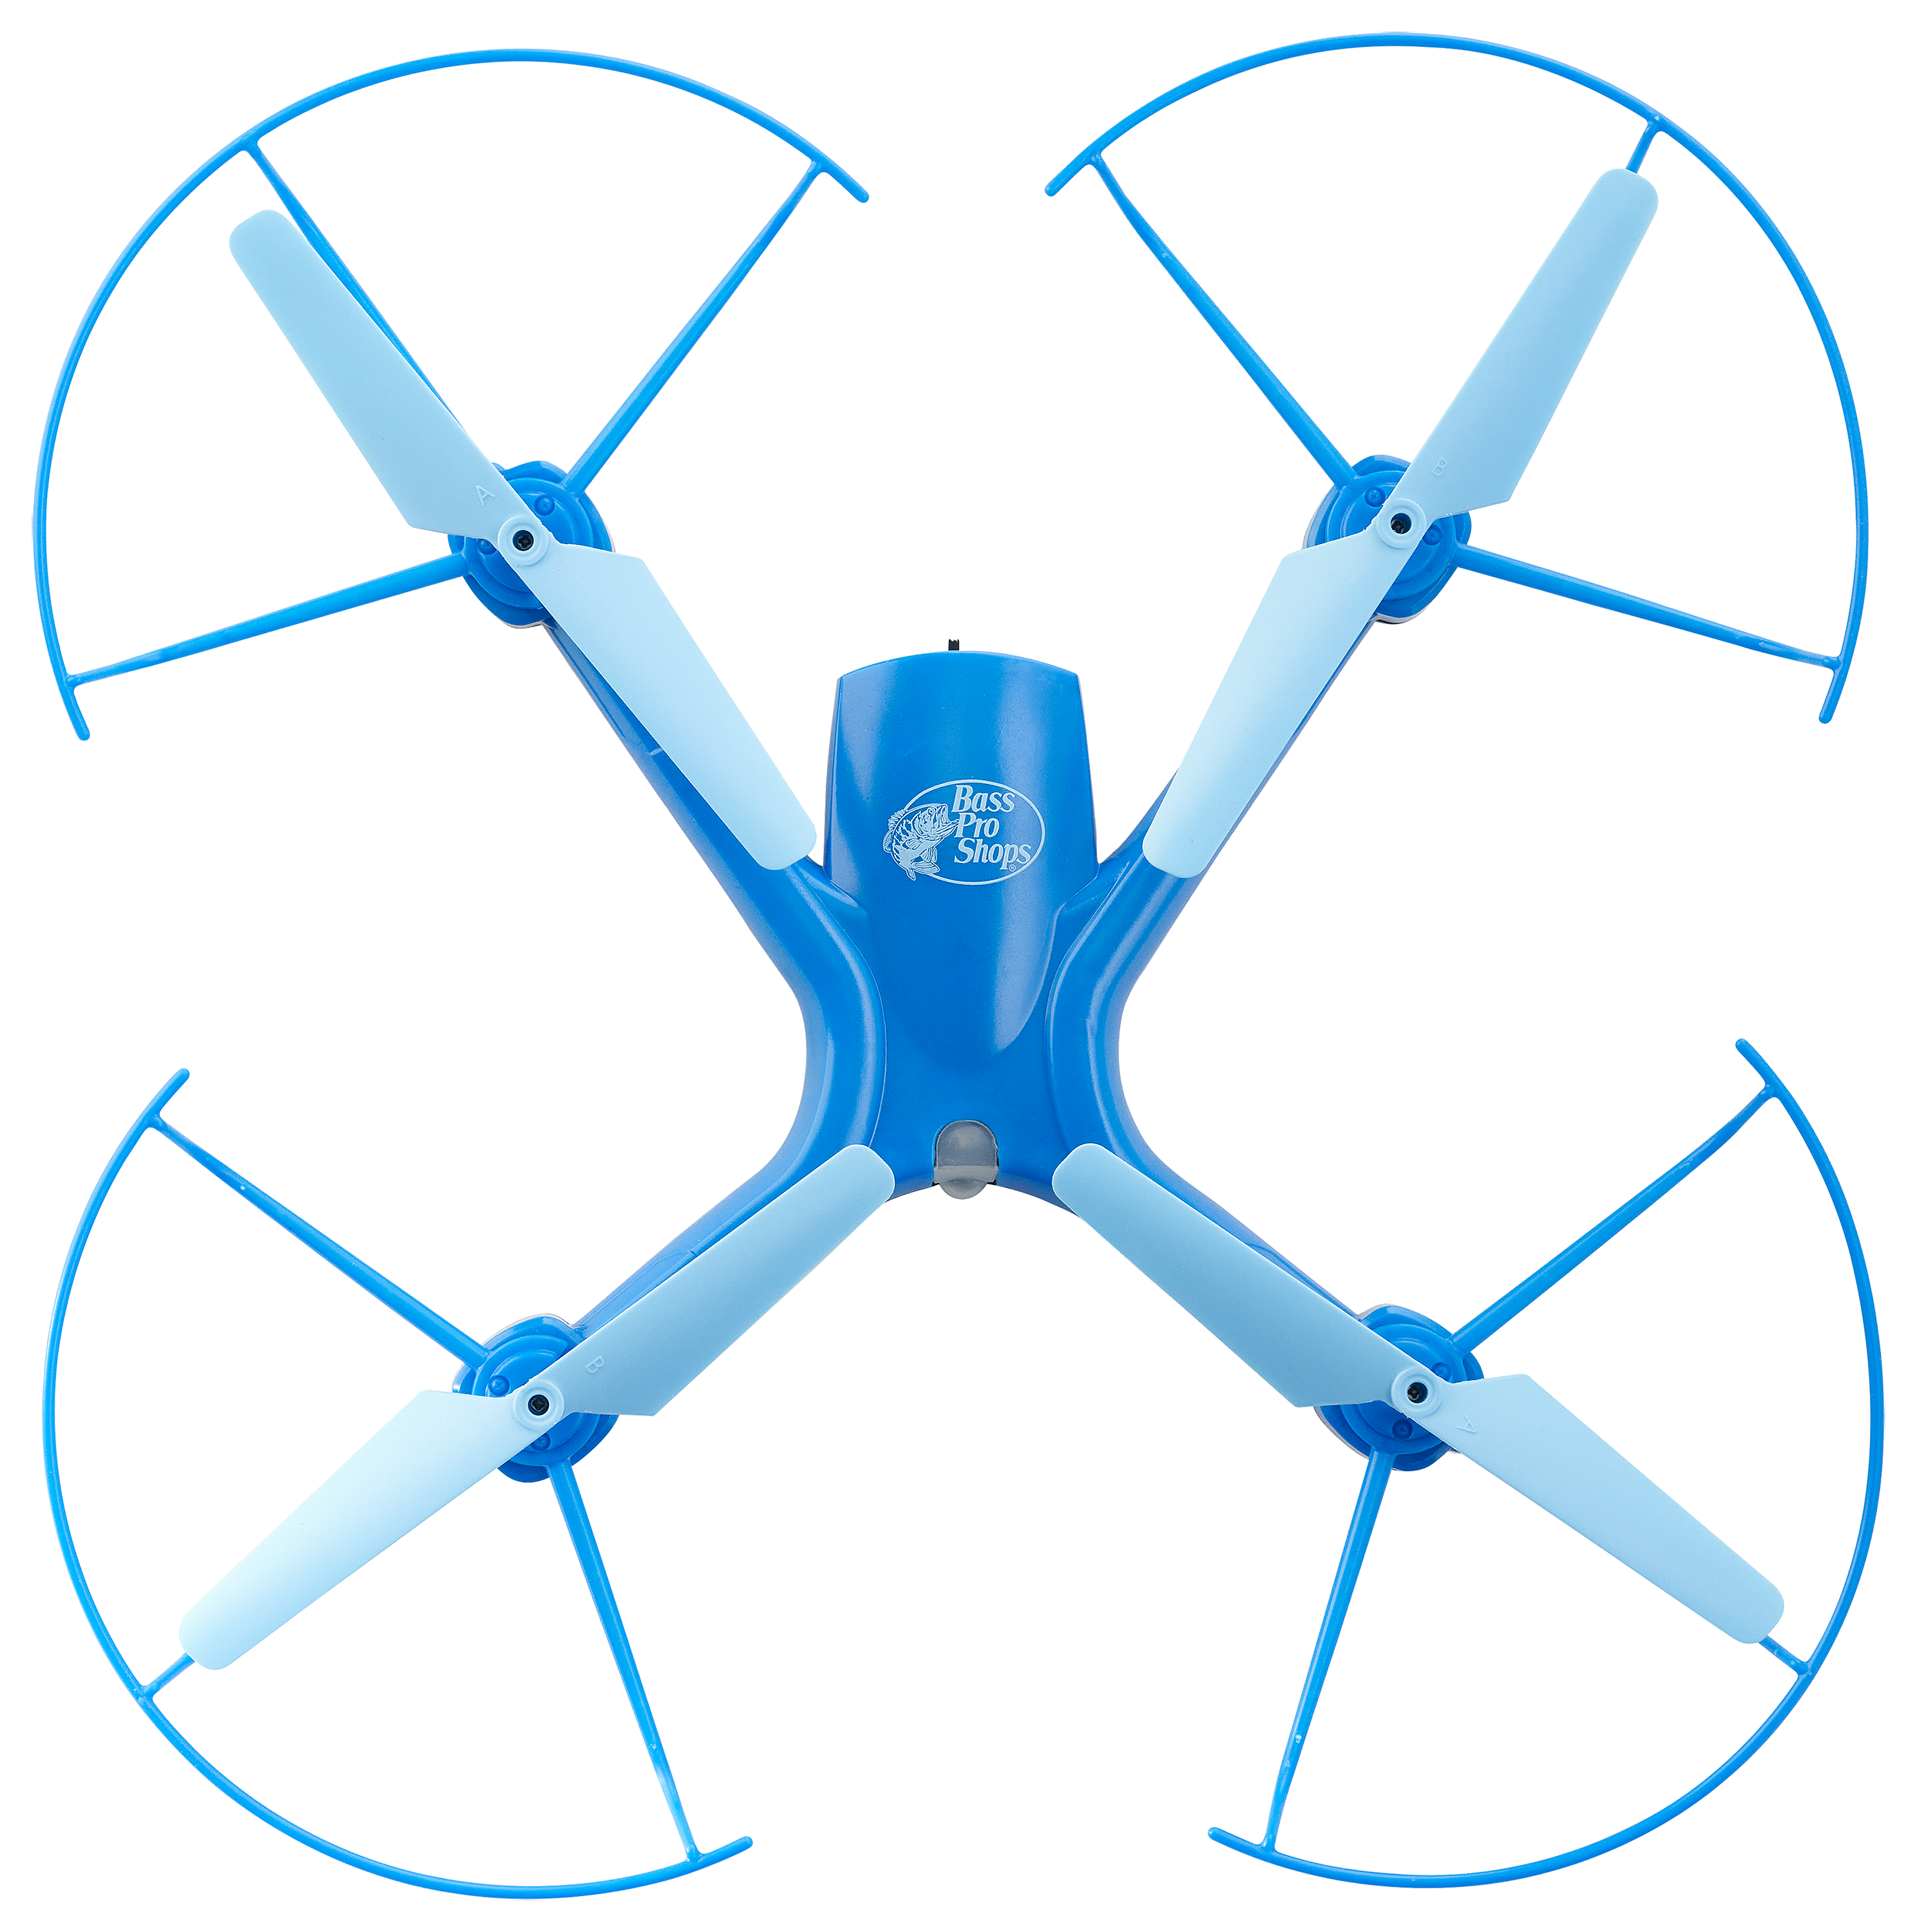 Bass Pro Shops Xcalibur Remote-Control Quadcopter Drone with Camera